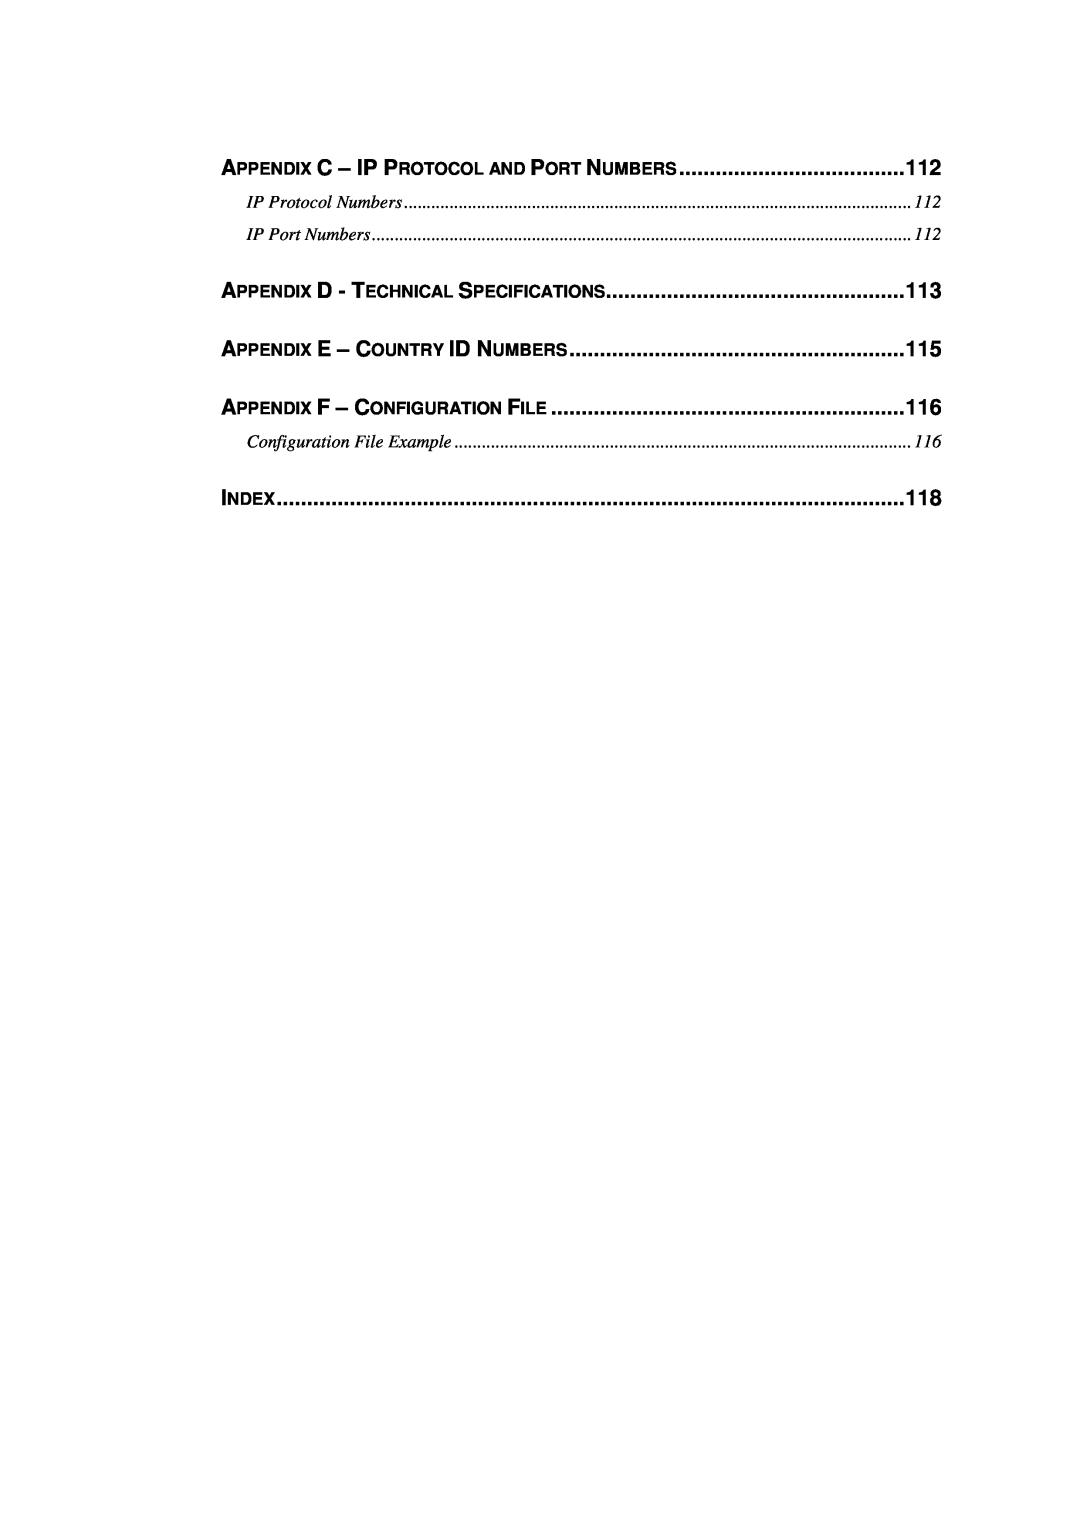 D-Link DI-308 manual Appendix C - Ip Protocol And Port Numbers, Appendix D - Technical Specifications, Index 